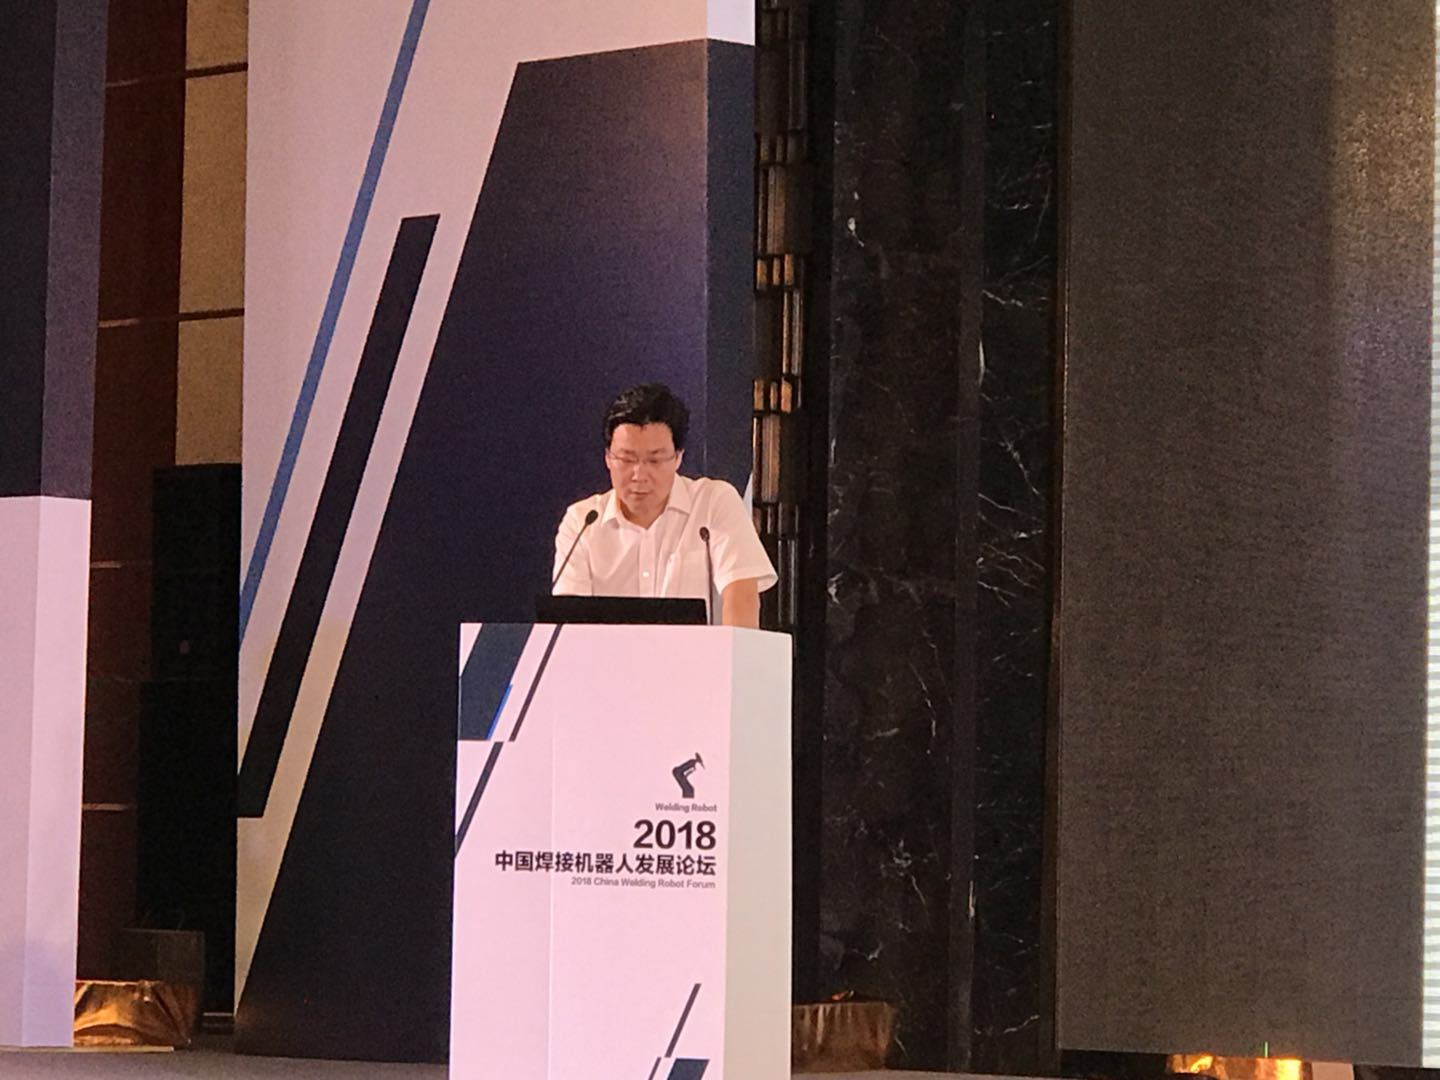 Zhongnan Intelligent Changtai Robot was invited to participate in the 2018 China Welding Robot Development Forum